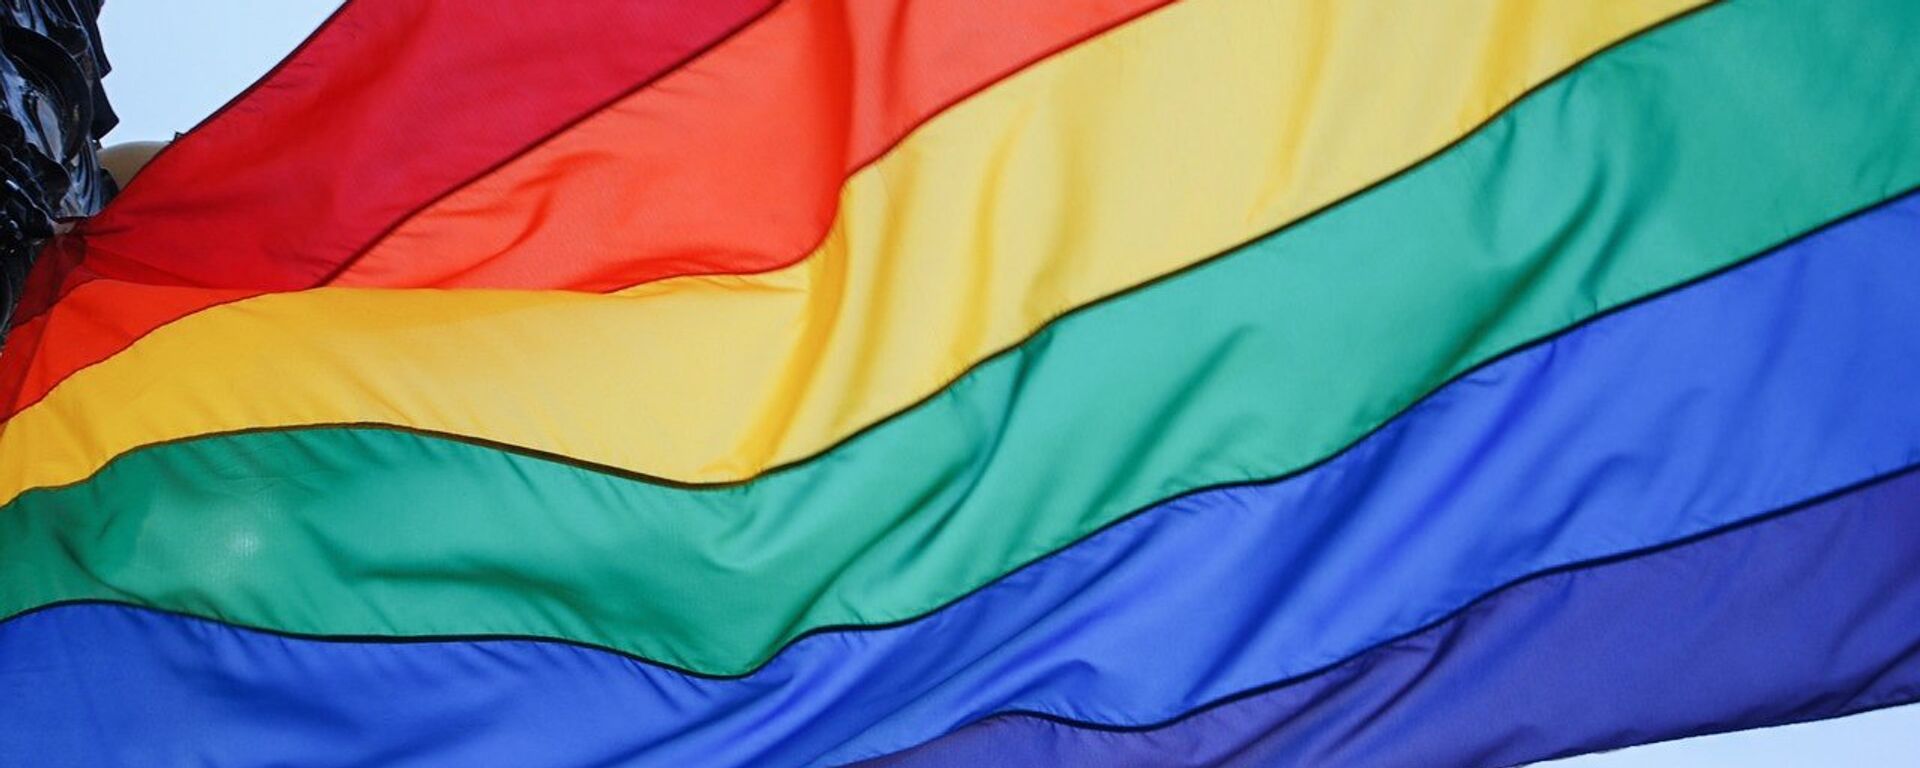 Bandera arcoíris, símbolo del movimiento LGBT - Sputnik Mundo, 1920, 26.06.2020